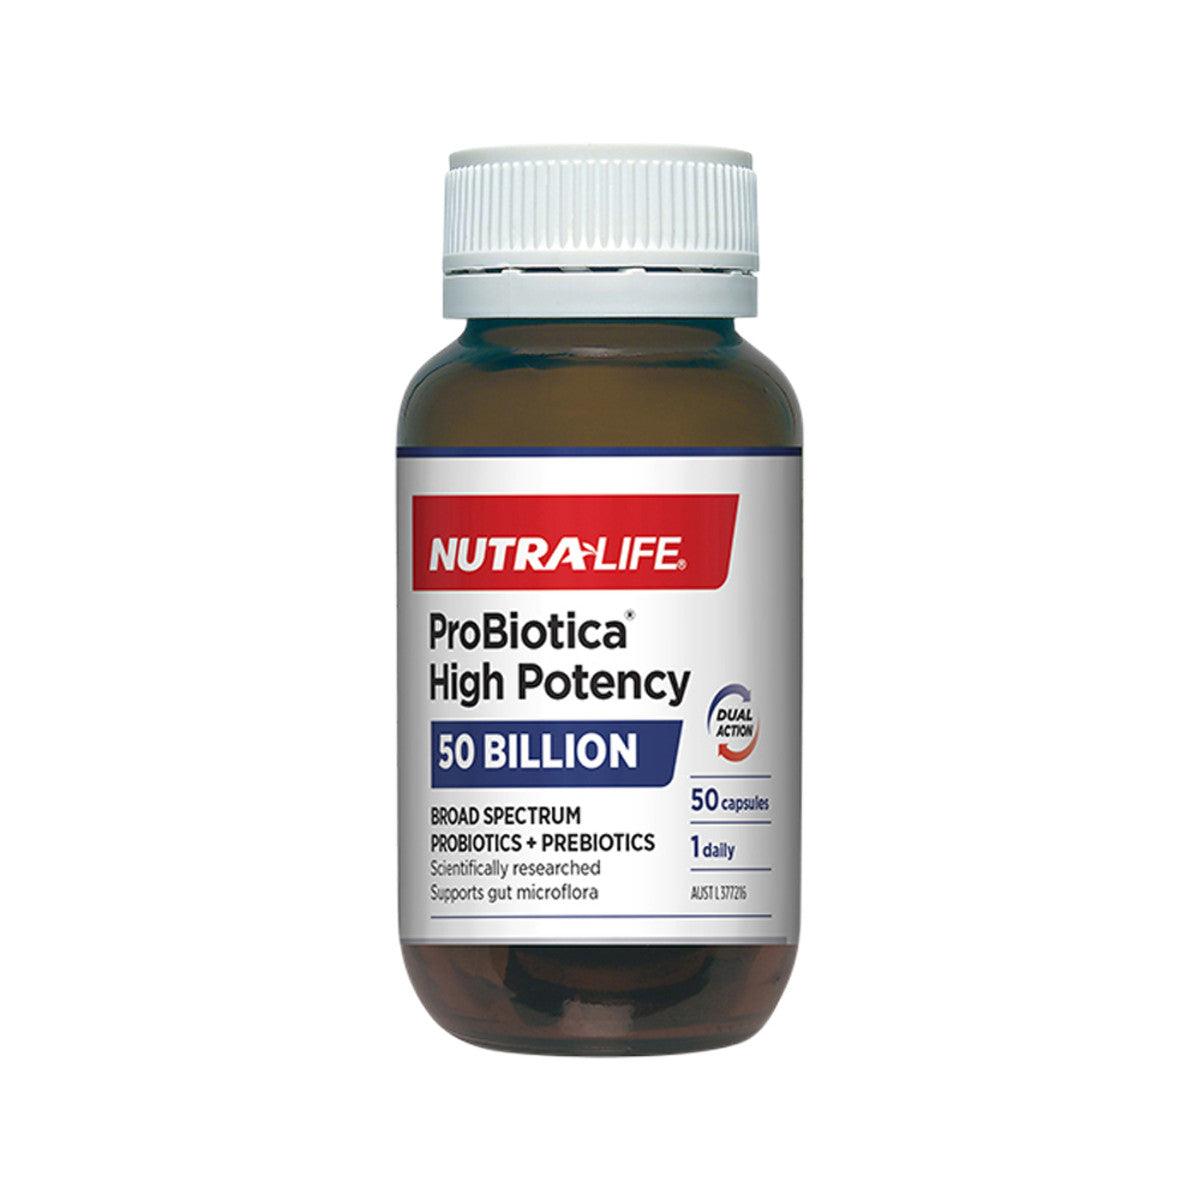 NutraLife Probiotica High Potency 50 Capsules - QVM Vitamins™